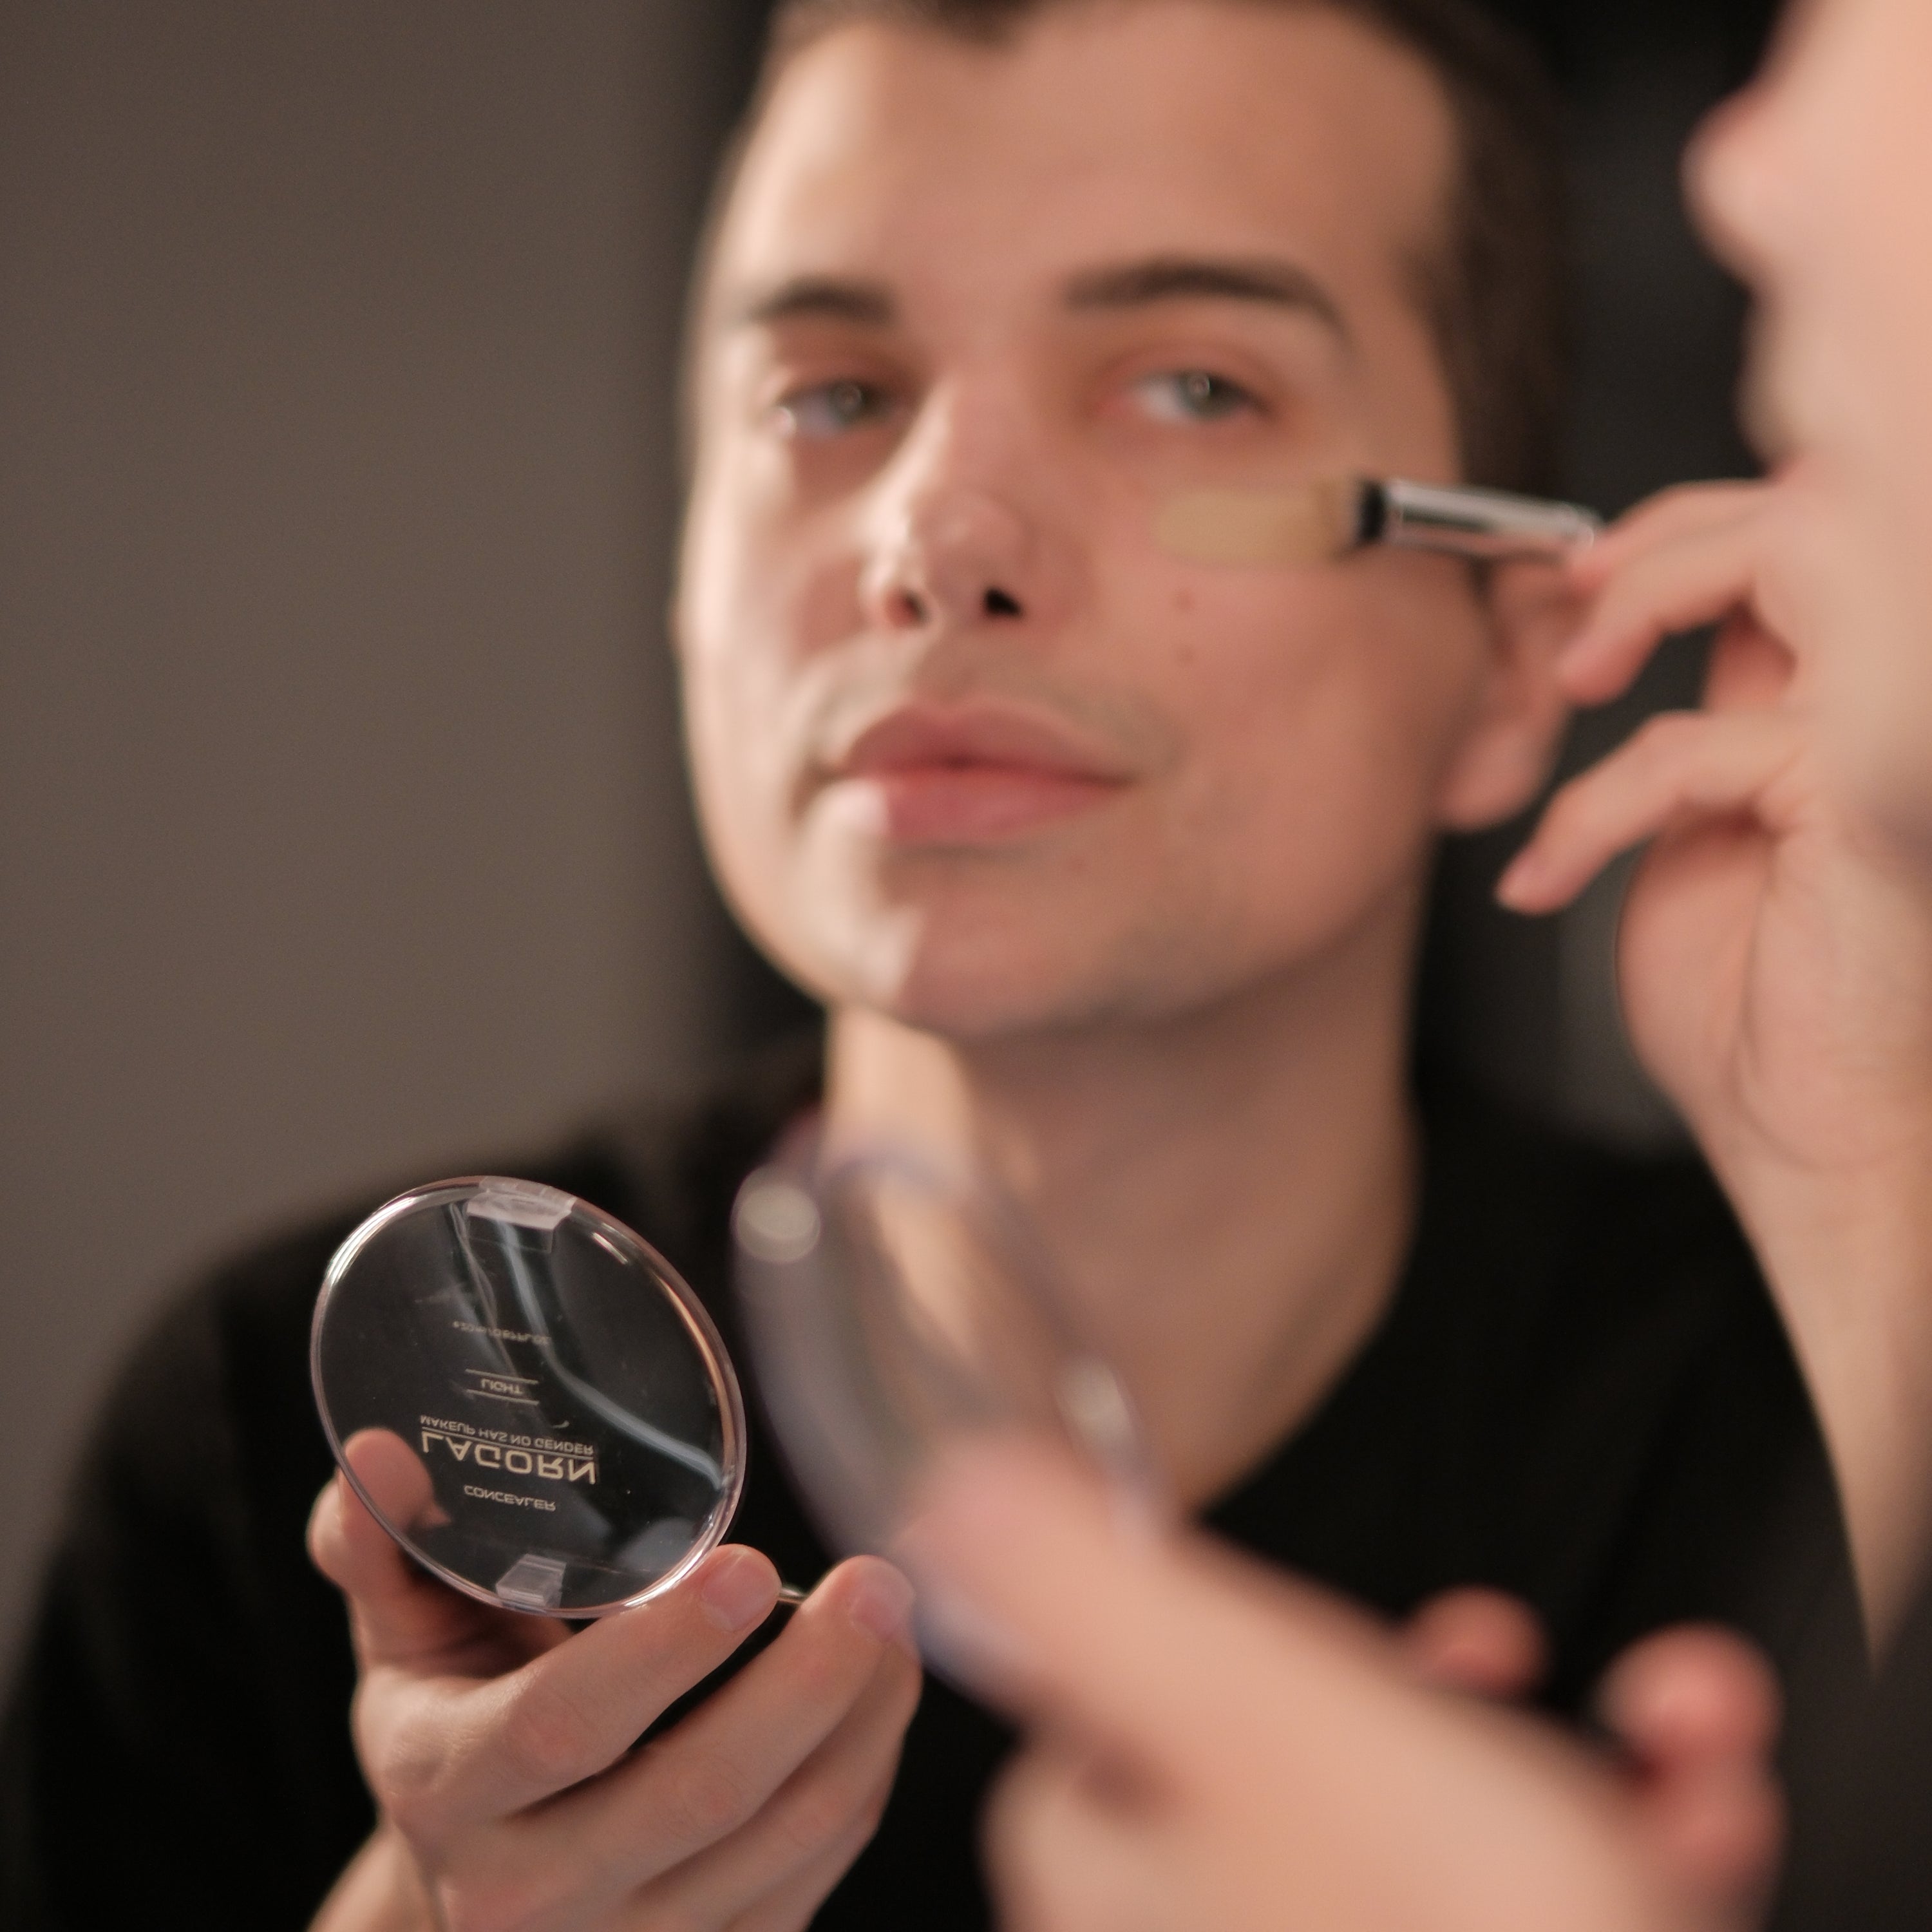 men beauty products transgender make up lgbtq makeup looks gay makeup looks